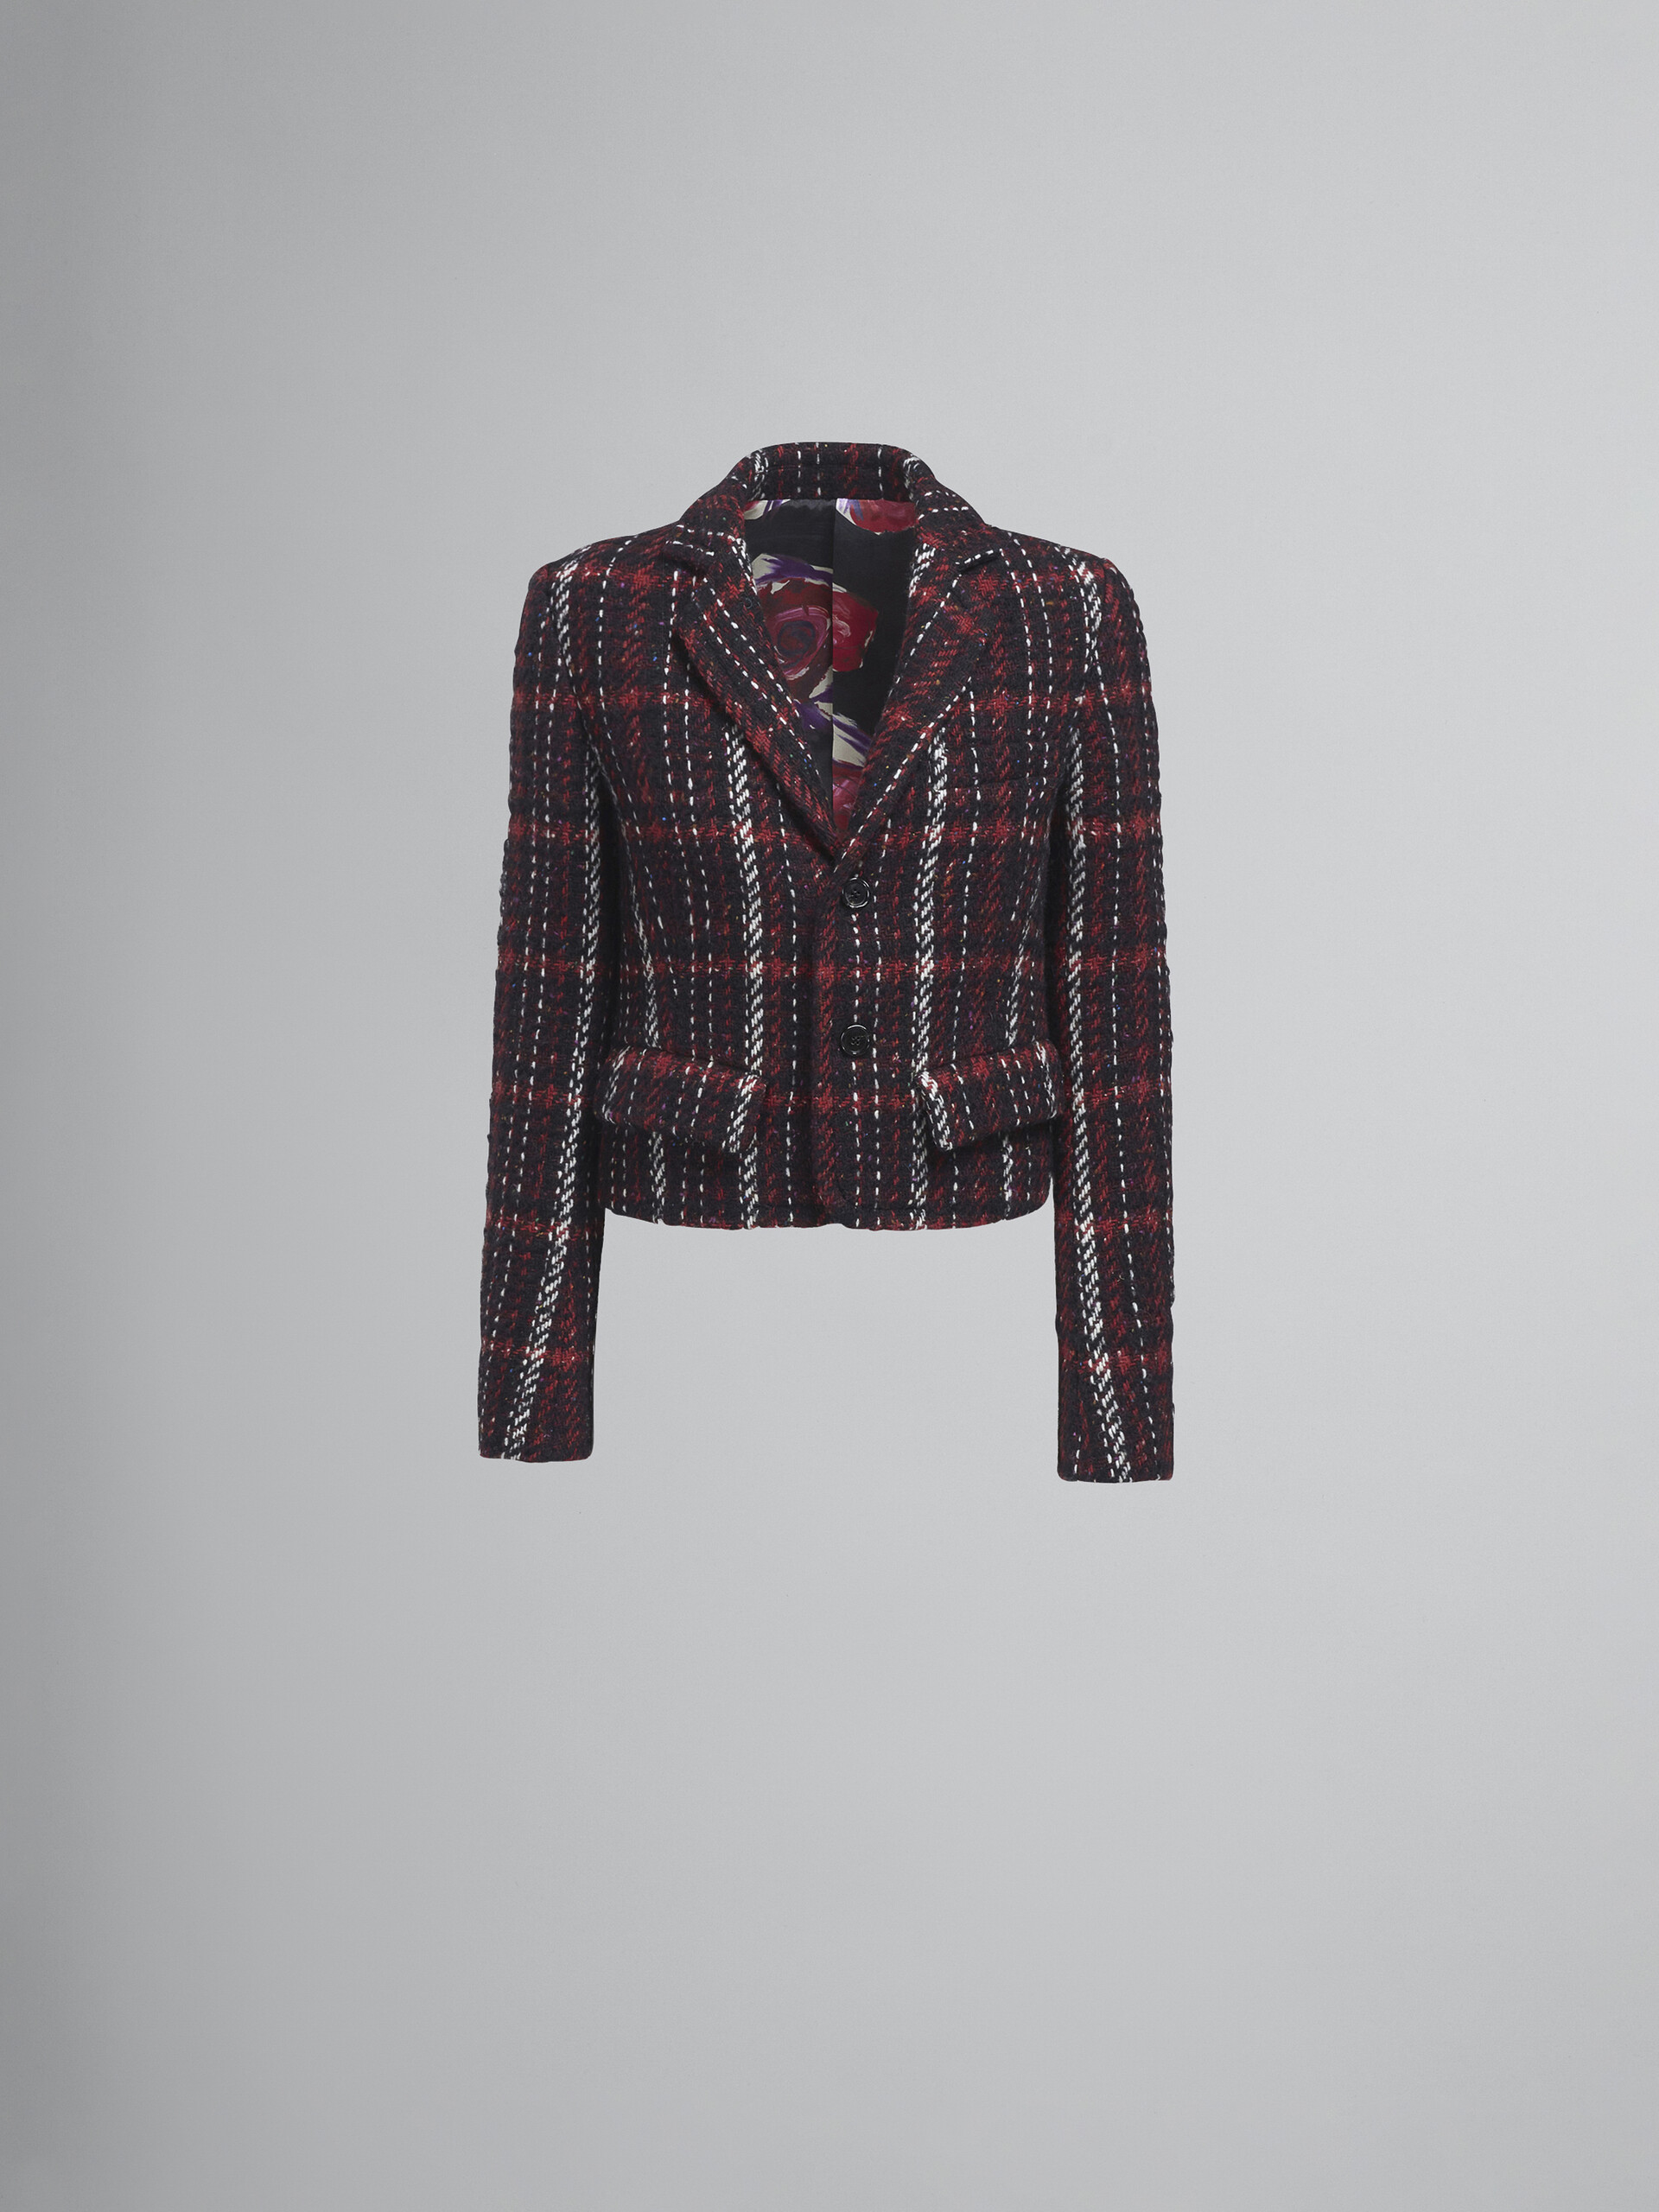 Reversible speckled tweed baby jacket - Jackets - Image 1